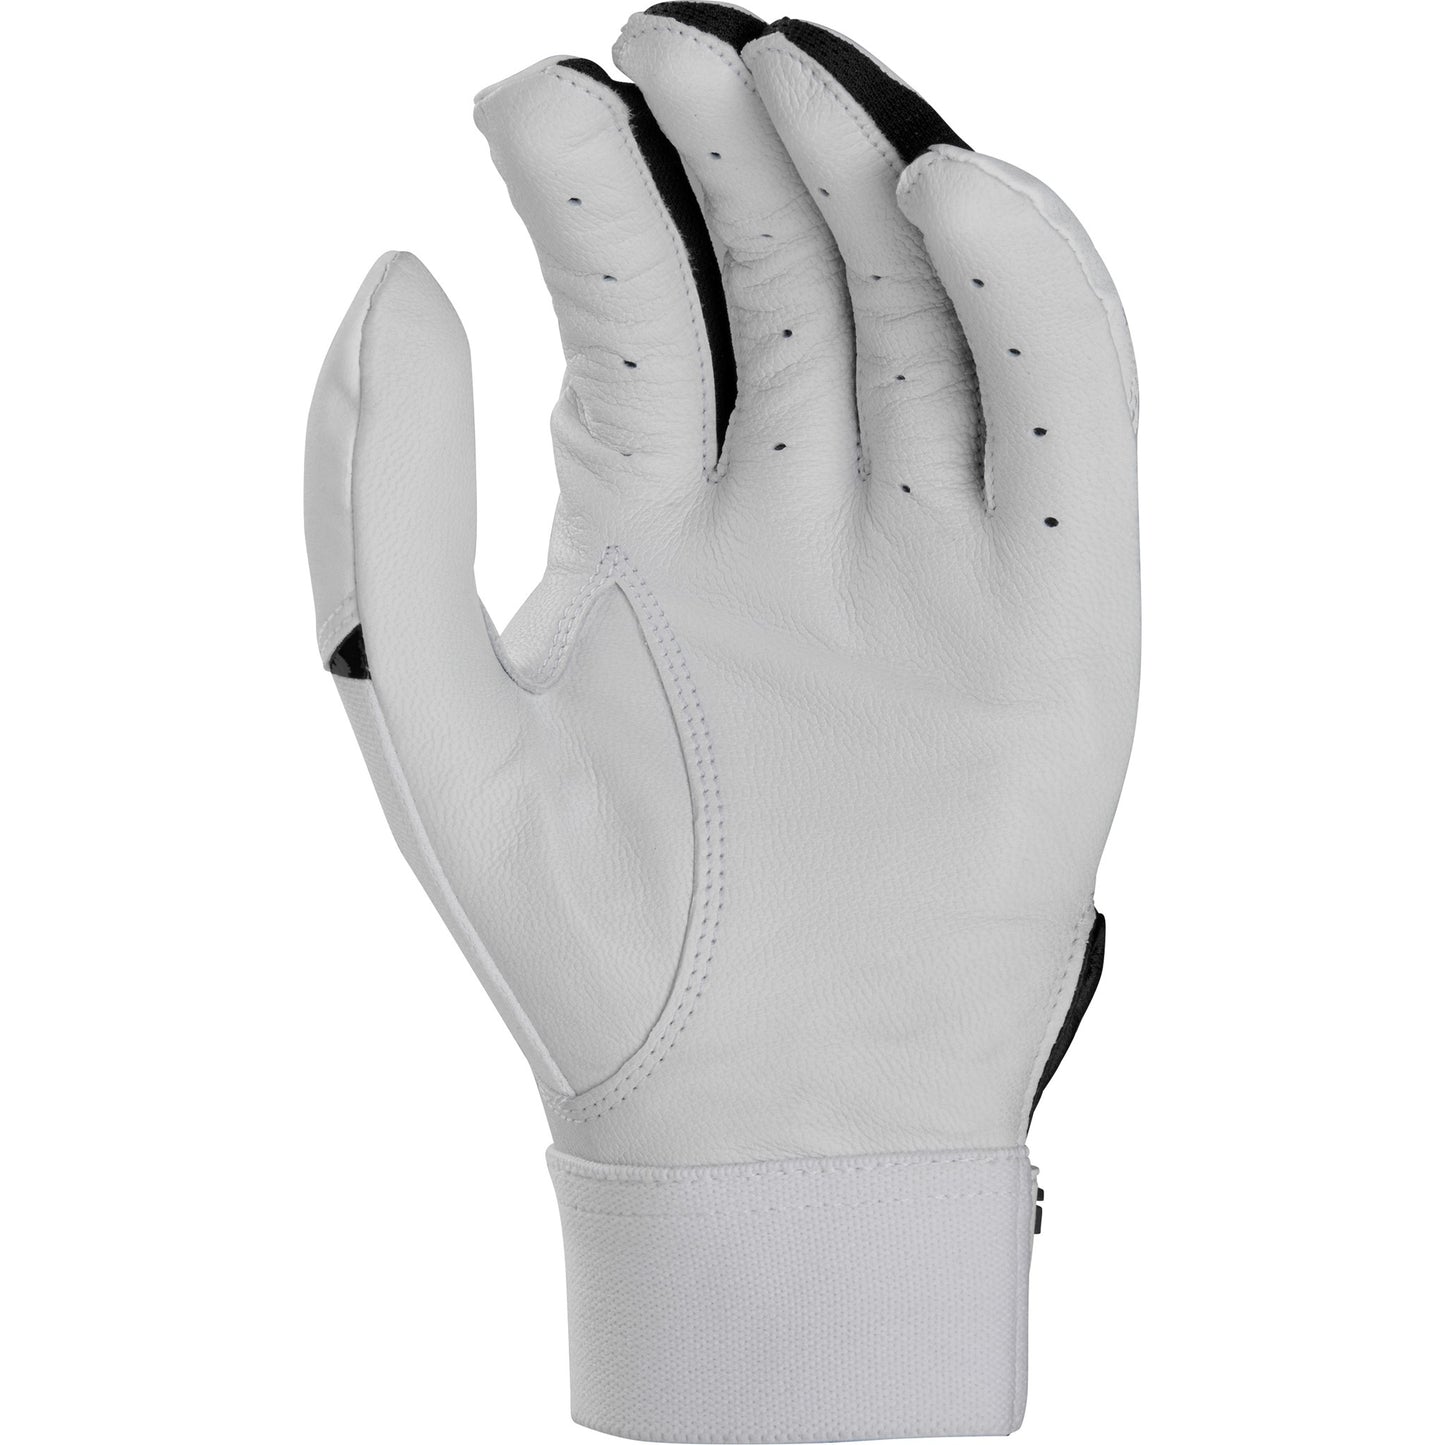 Rawlings (BR51BG) Batting Gloves (pair) - BLACK - ADULT SIZE